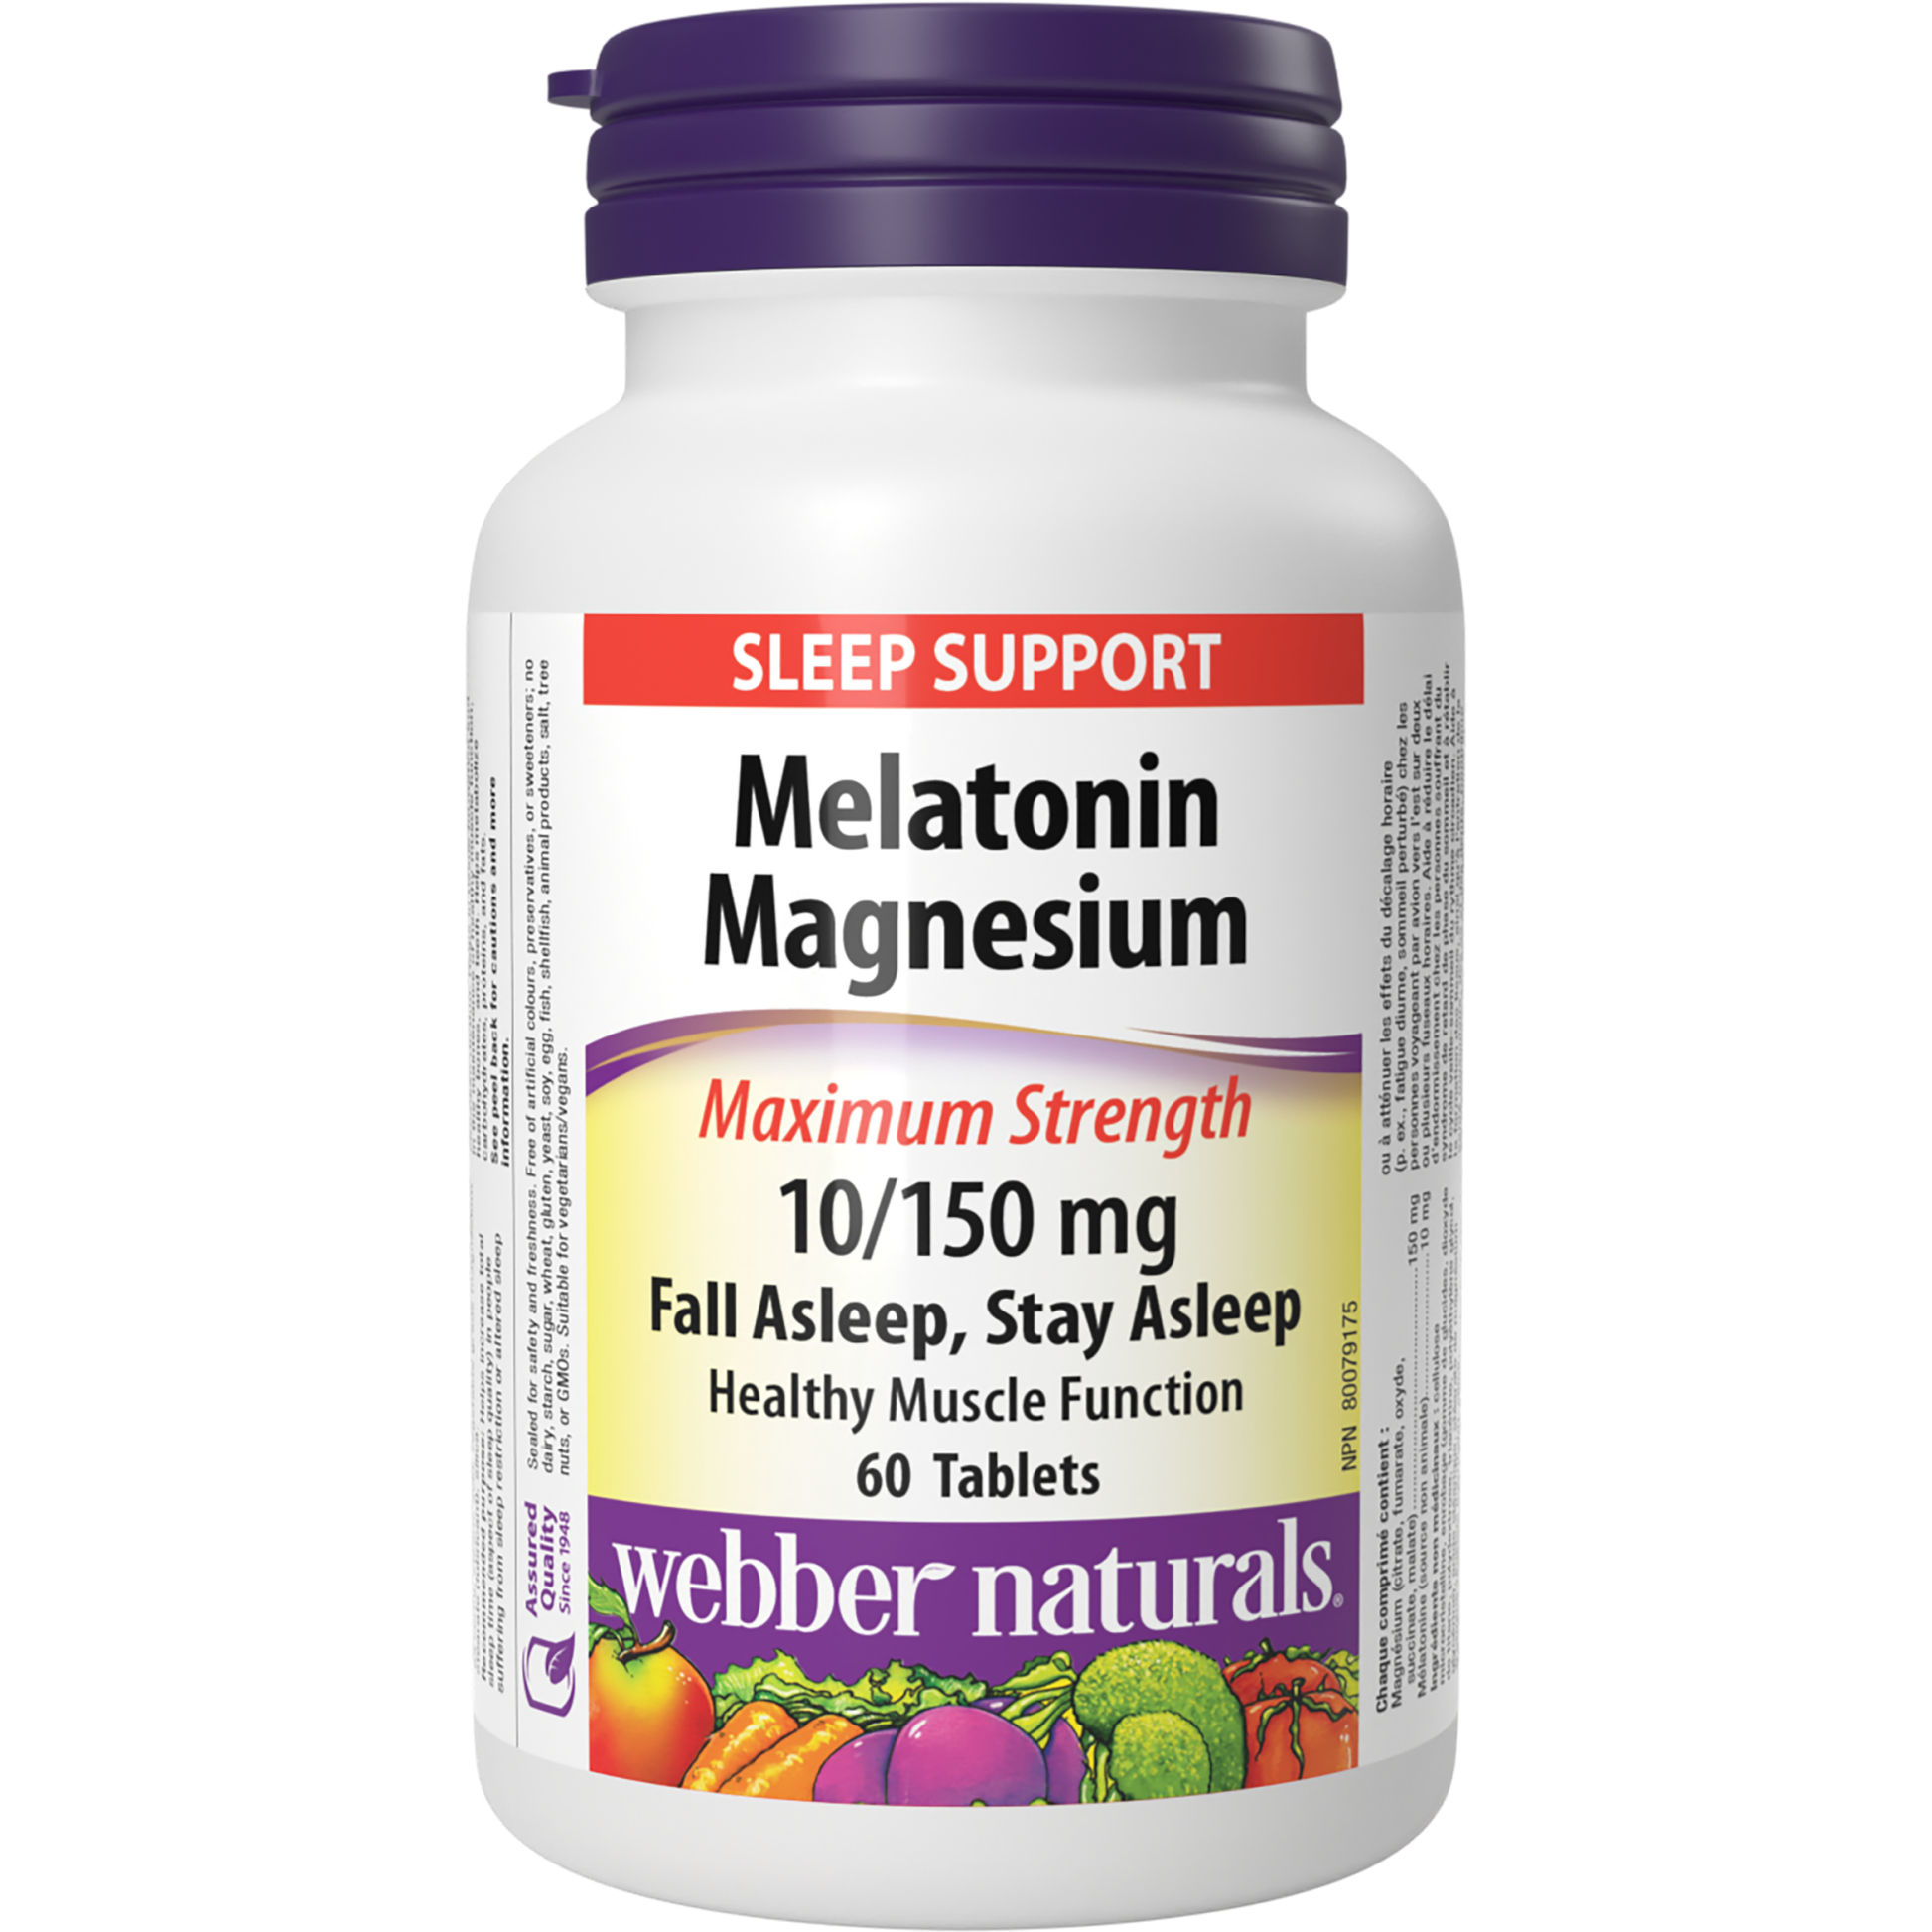 Melatonin Magnesium Maximum Strength 10/150 mg for Webber Naturals|v|hi-res|WN3174